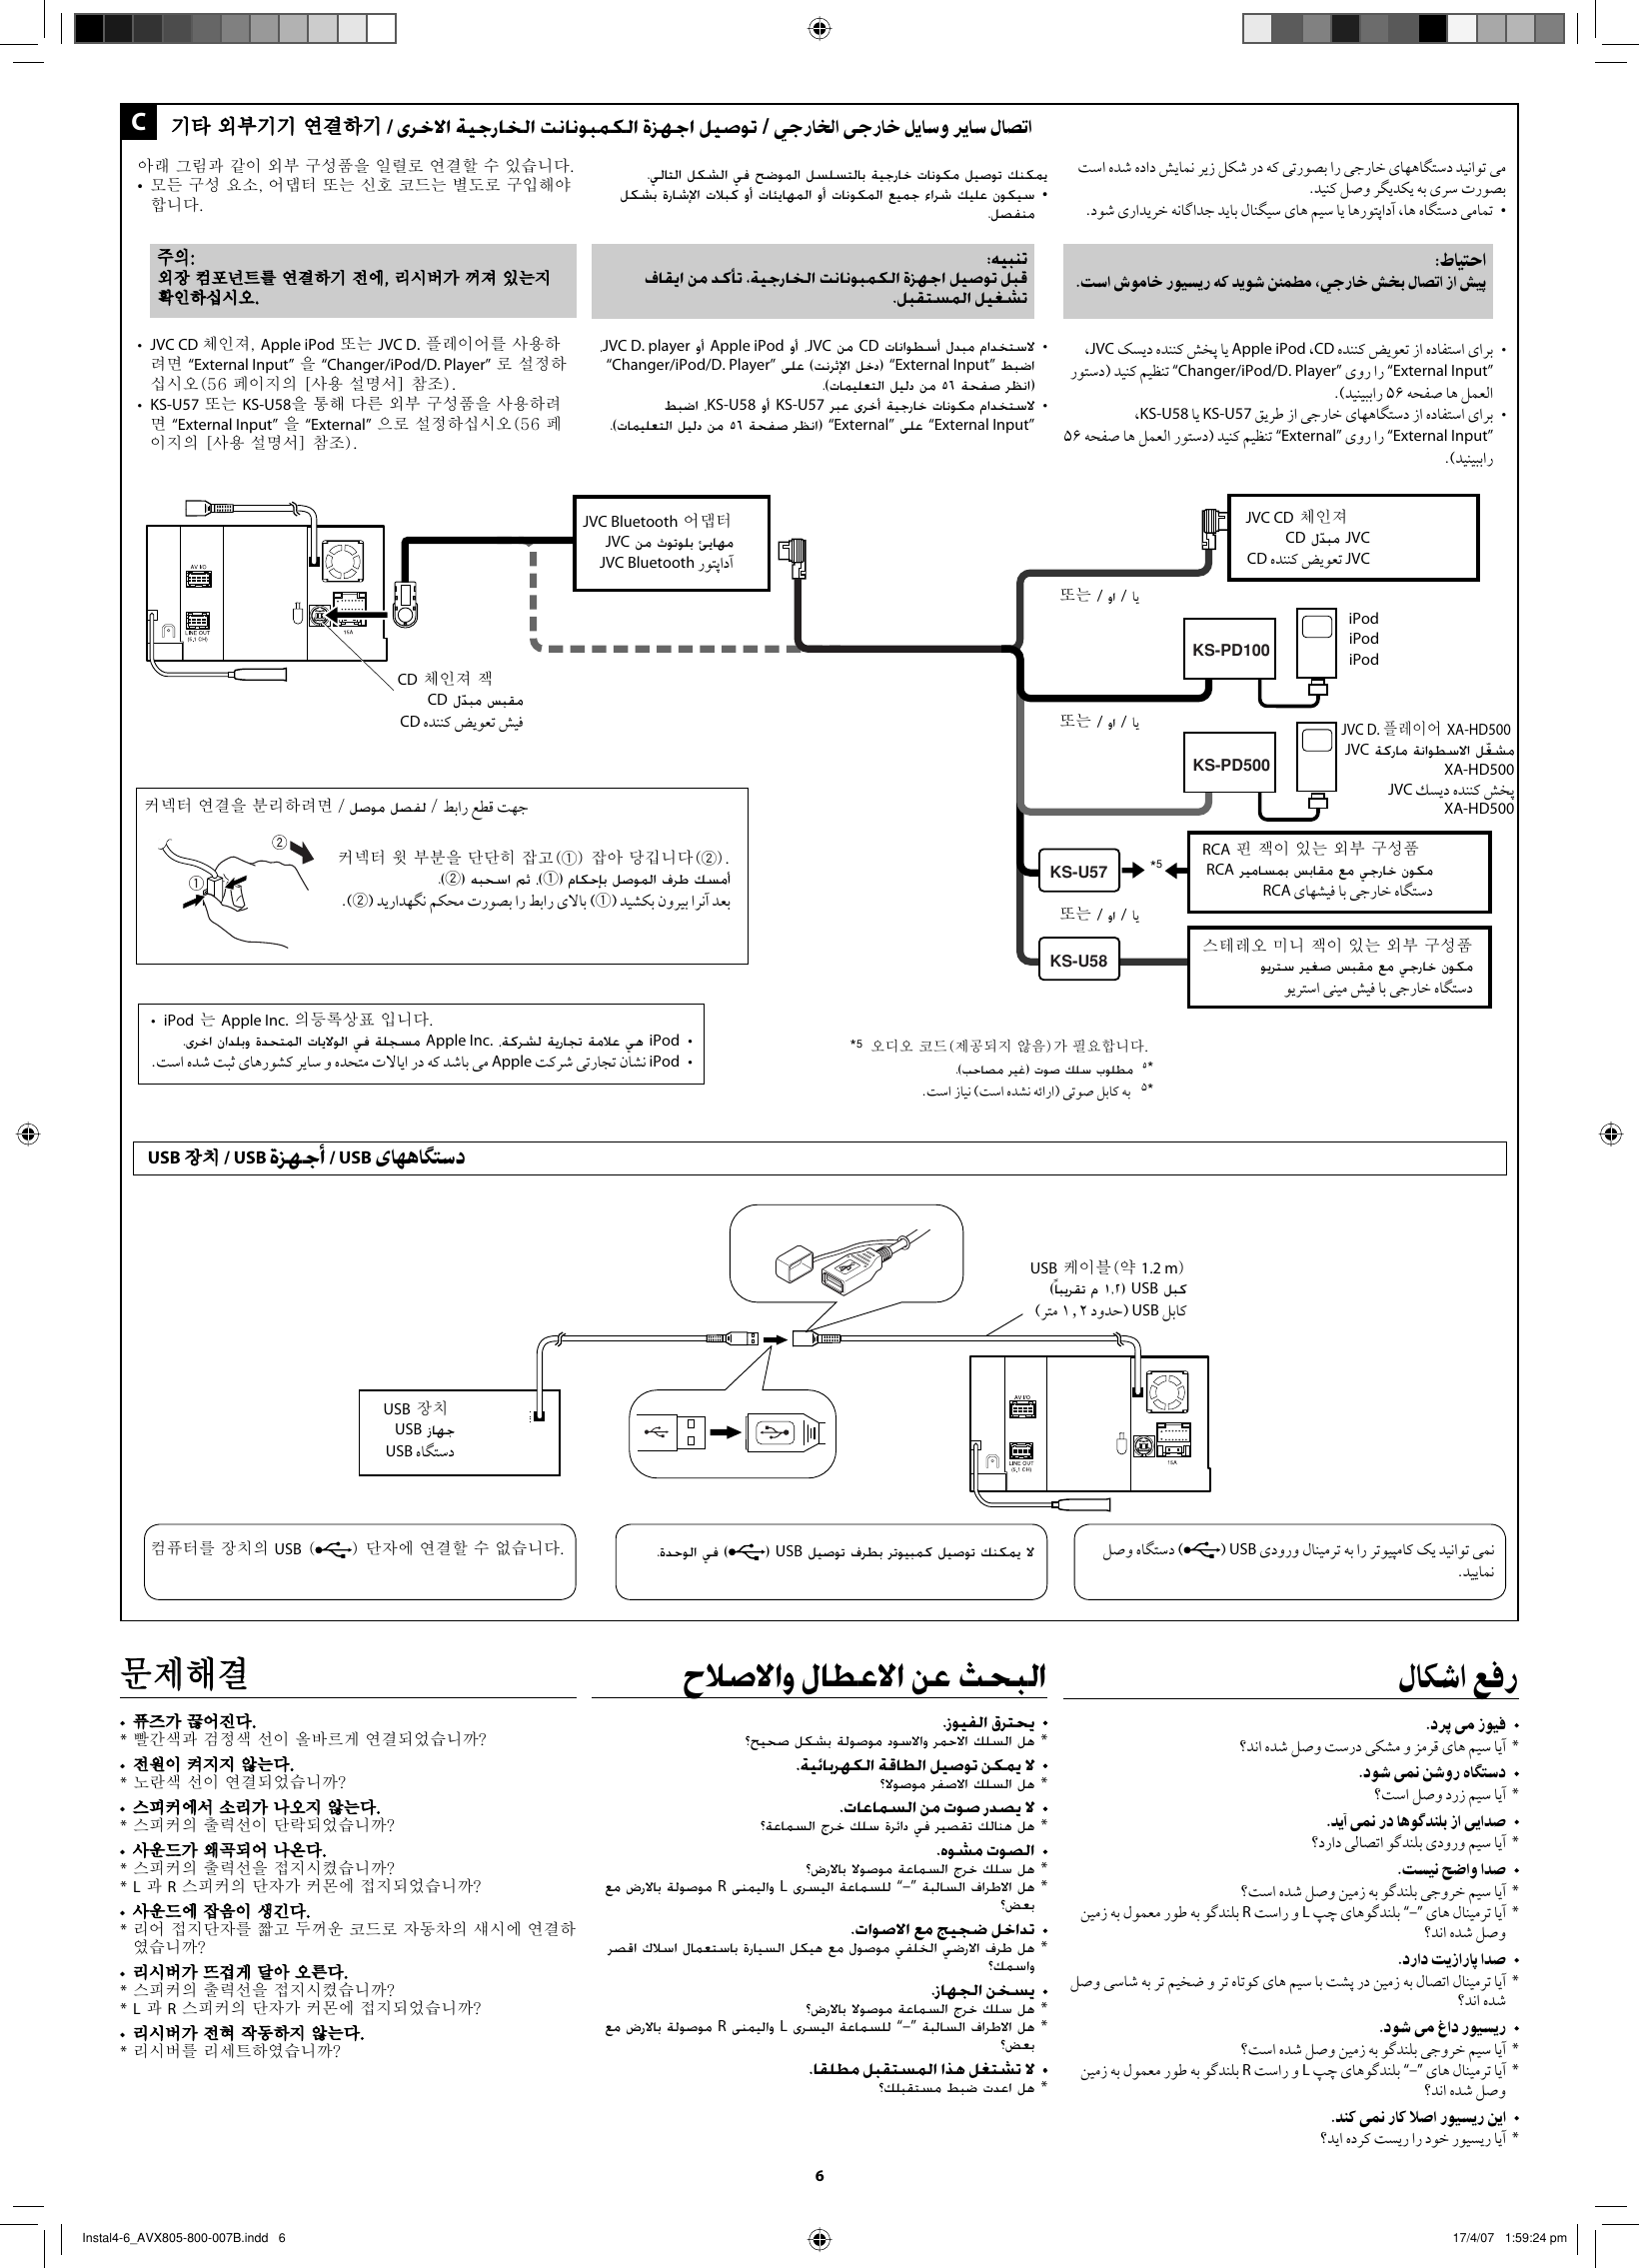 Page 6 of 6 - JVC KW-AVX800U KW-AVX805/KW-AVX800[U] User Manual INSTALLATION (Asia) LVT1667-007B